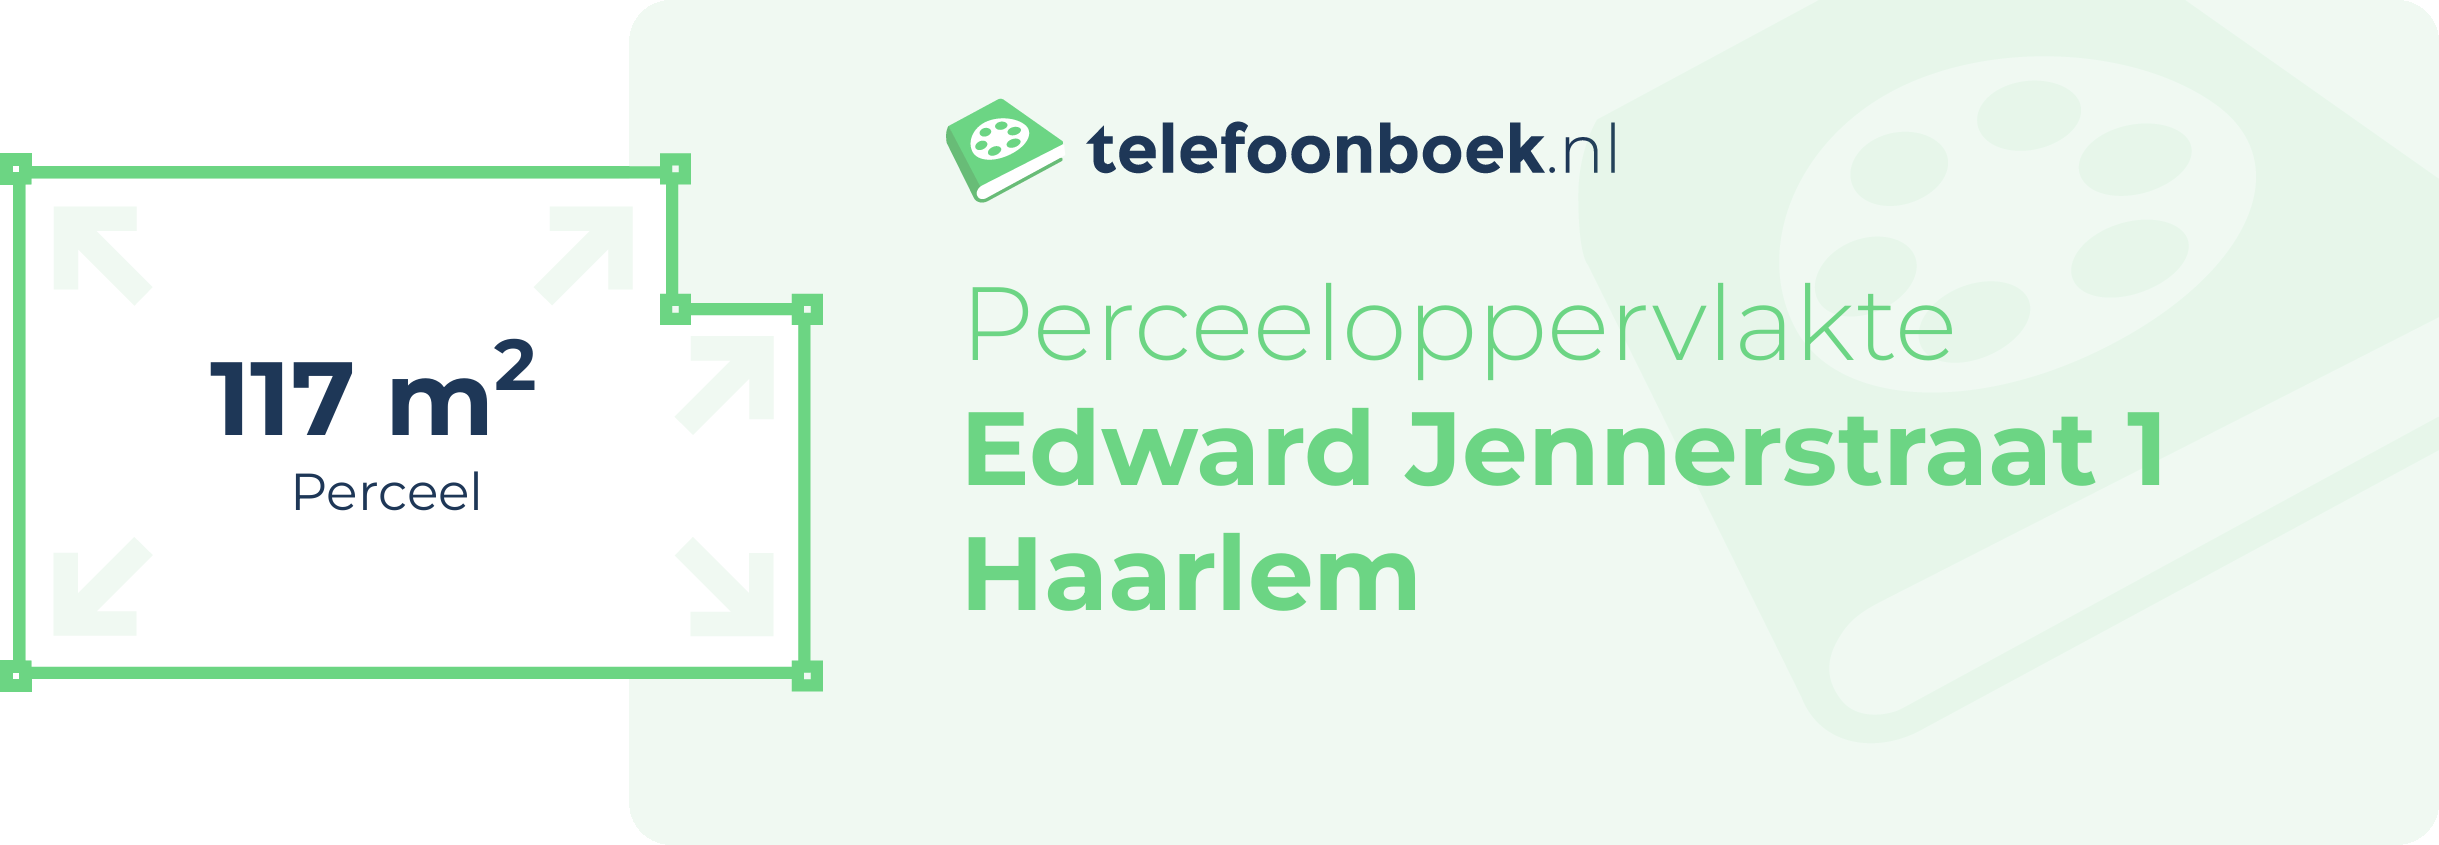 Perceeloppervlakte Edward Jennerstraat 1 Haarlem